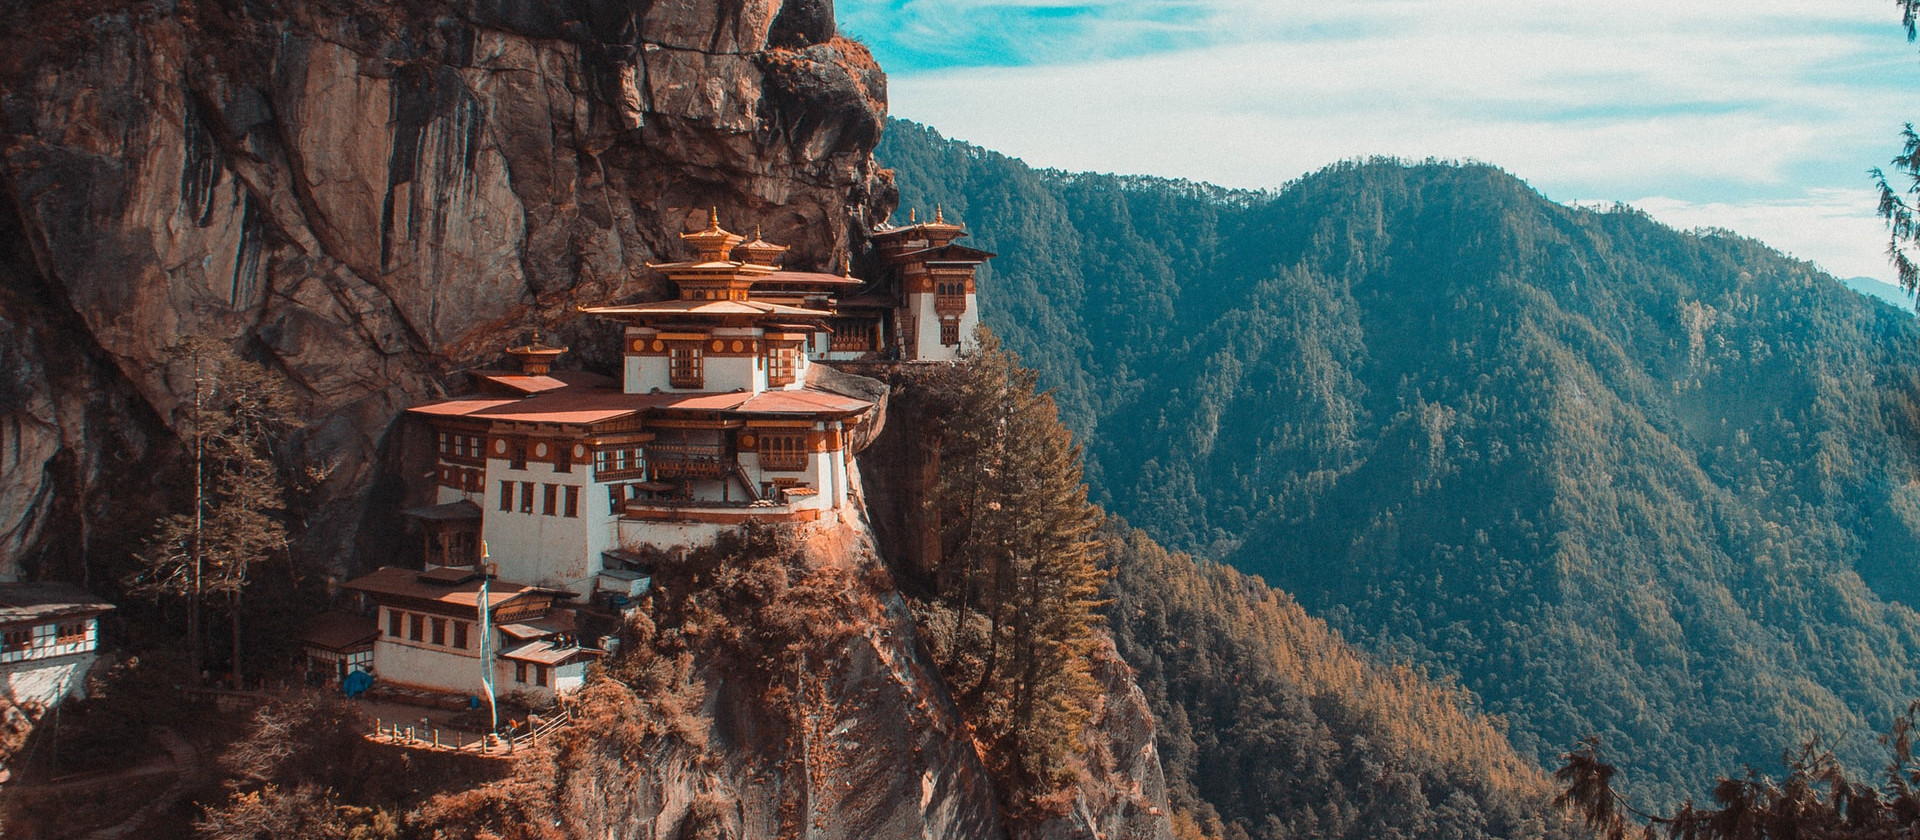 Tiger's Nest monastery, Bhutan